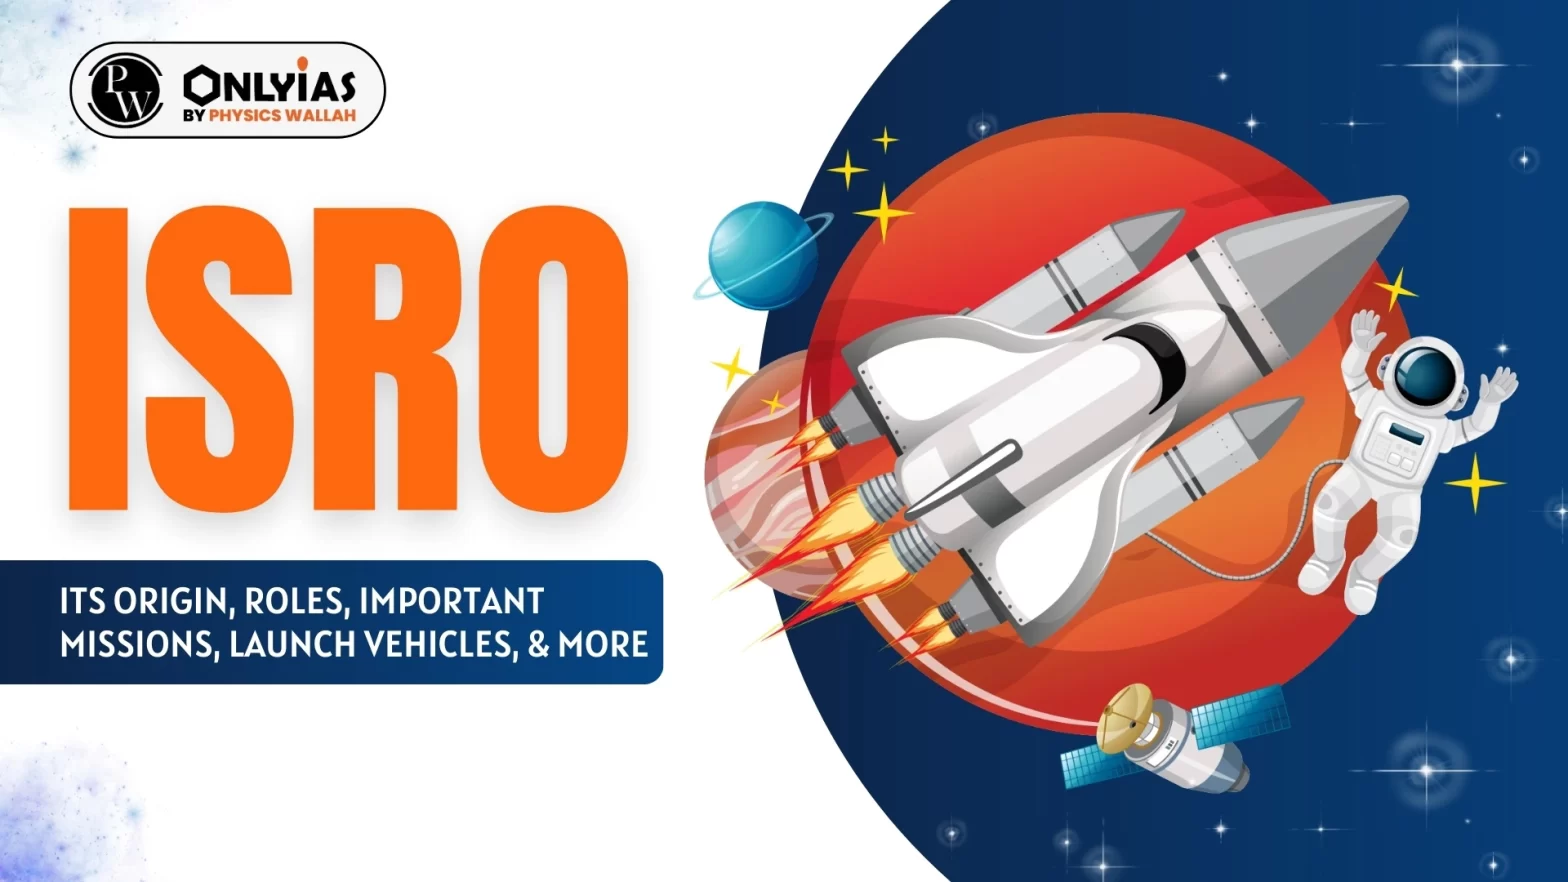 ISRO: Its Origin, Roles, Important Missions, Launch Vehicles, & More